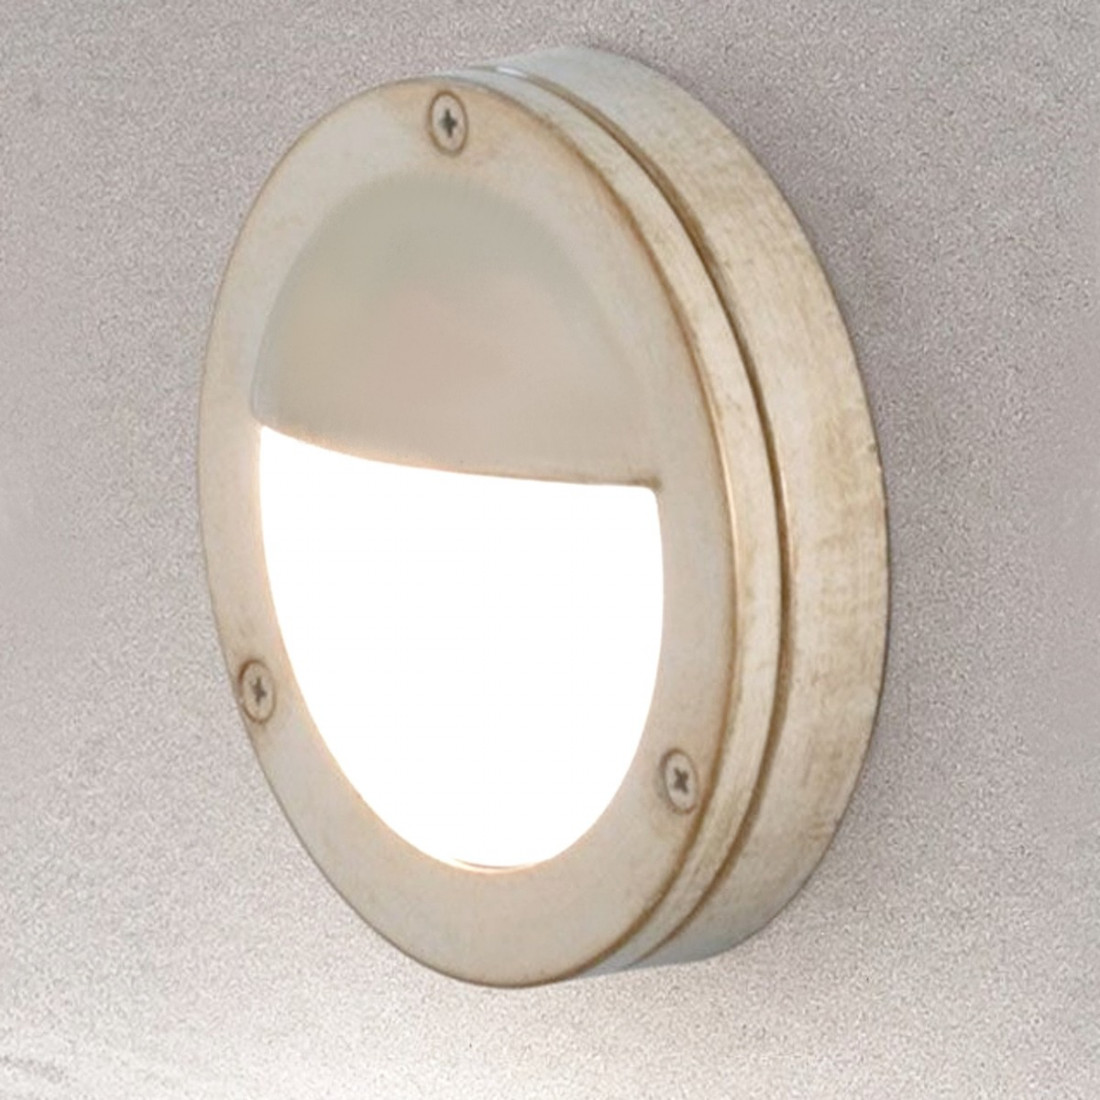 Applique FE-BRINDISI A500 AP G9 LED IP44 esterno alluminio decorato artigianale lampada parete tonda